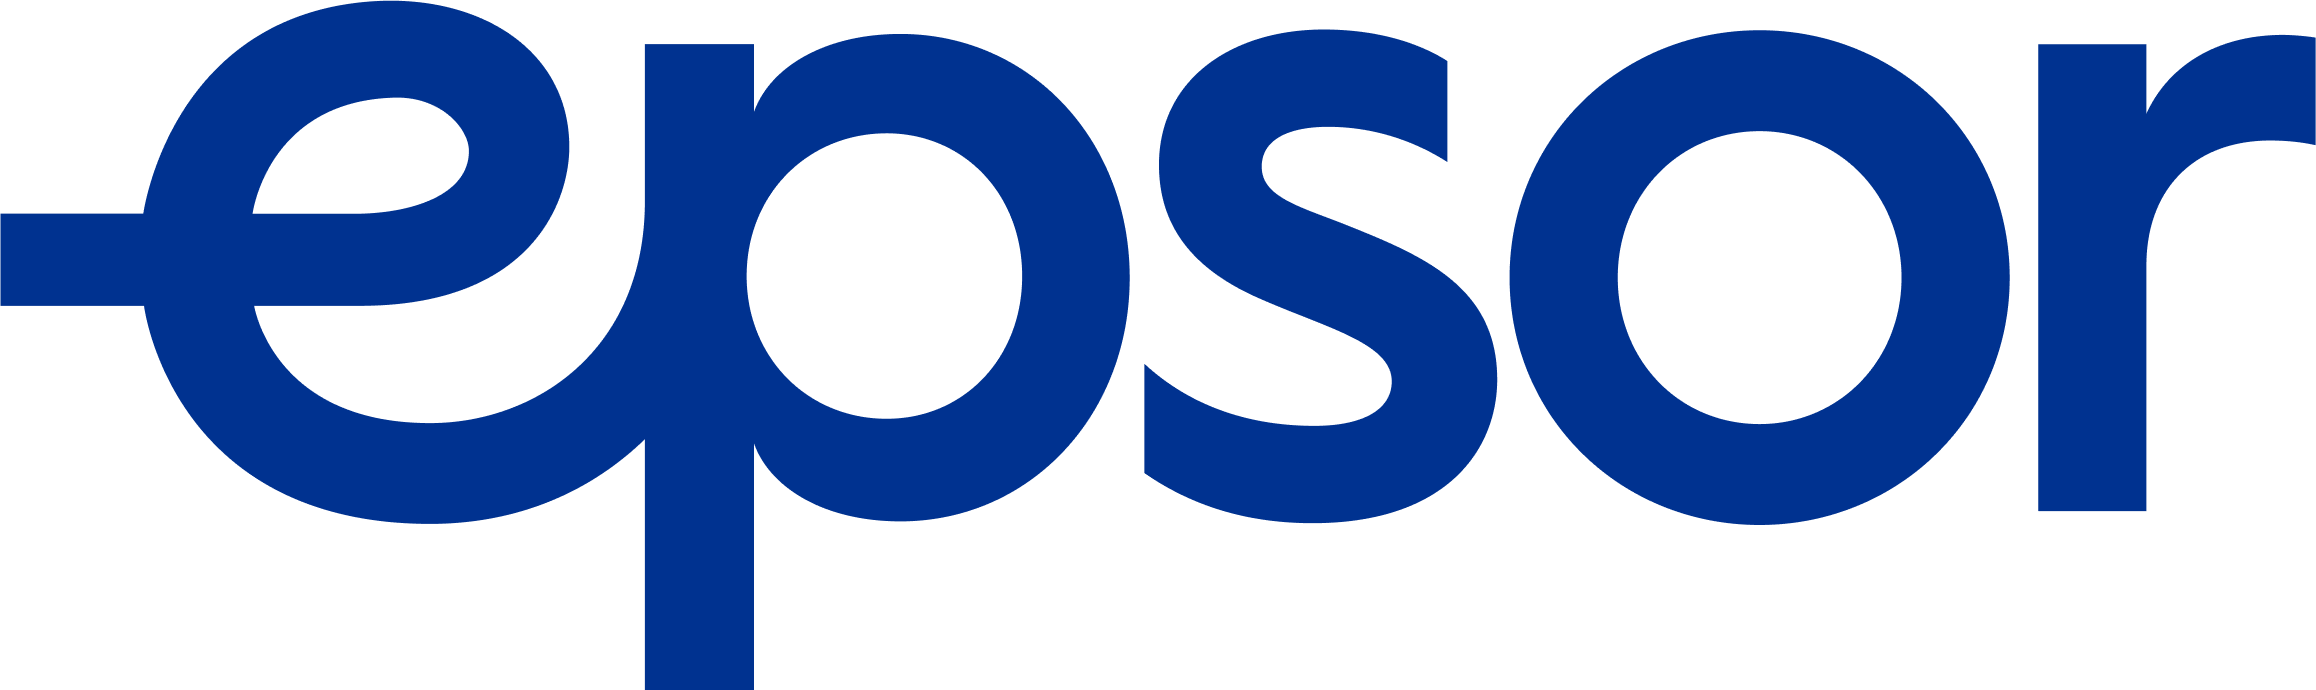 epsor logo